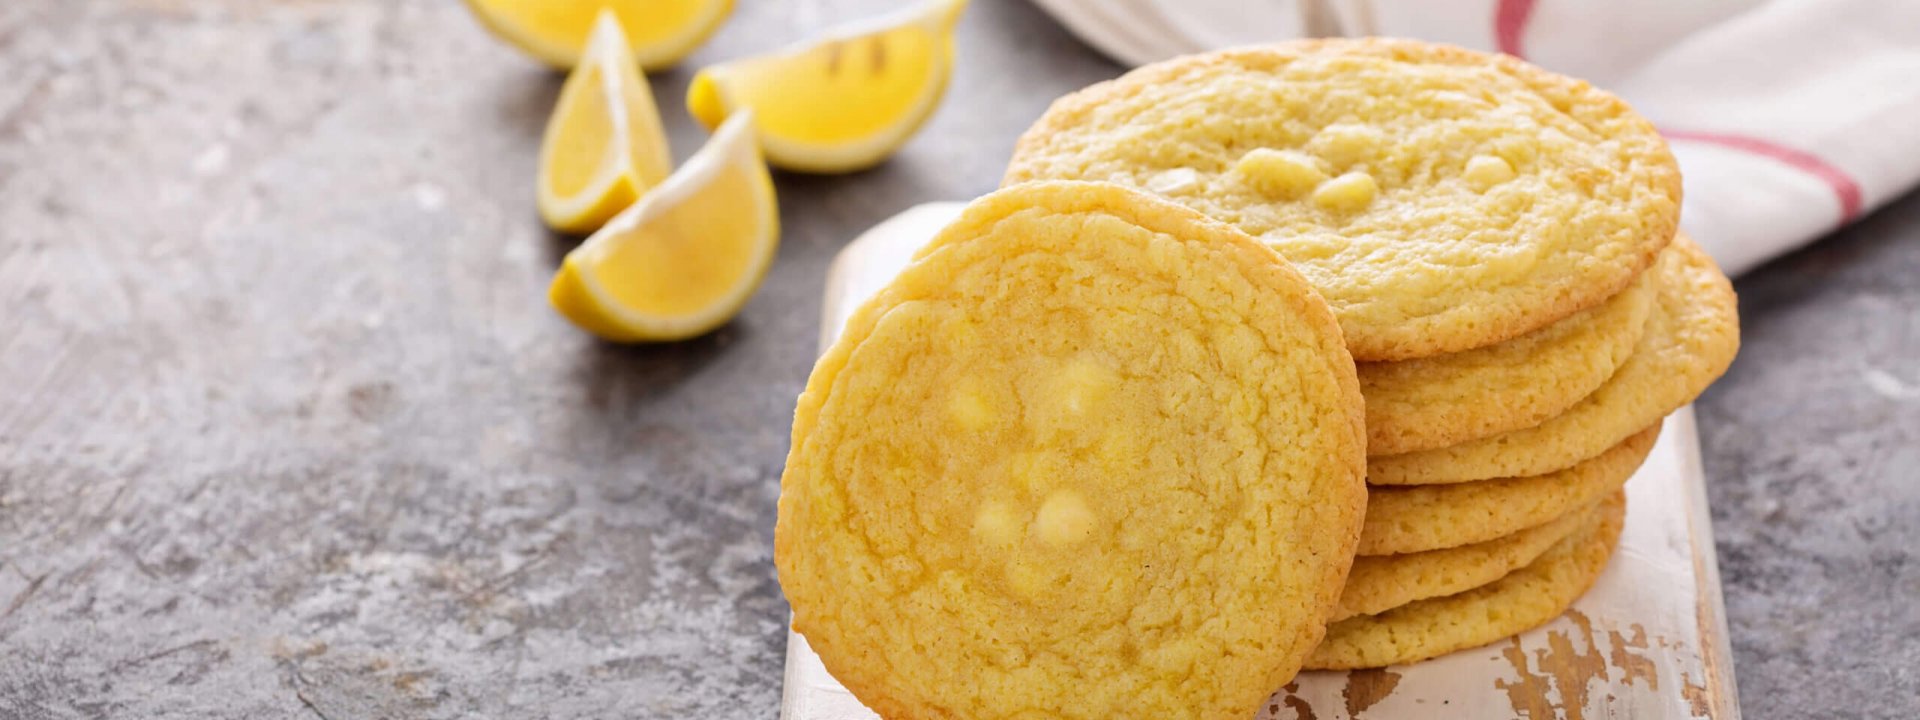 lemon-cookies-with-white-chocolate-chips-2023-11-27-04-54-53-utc (1)